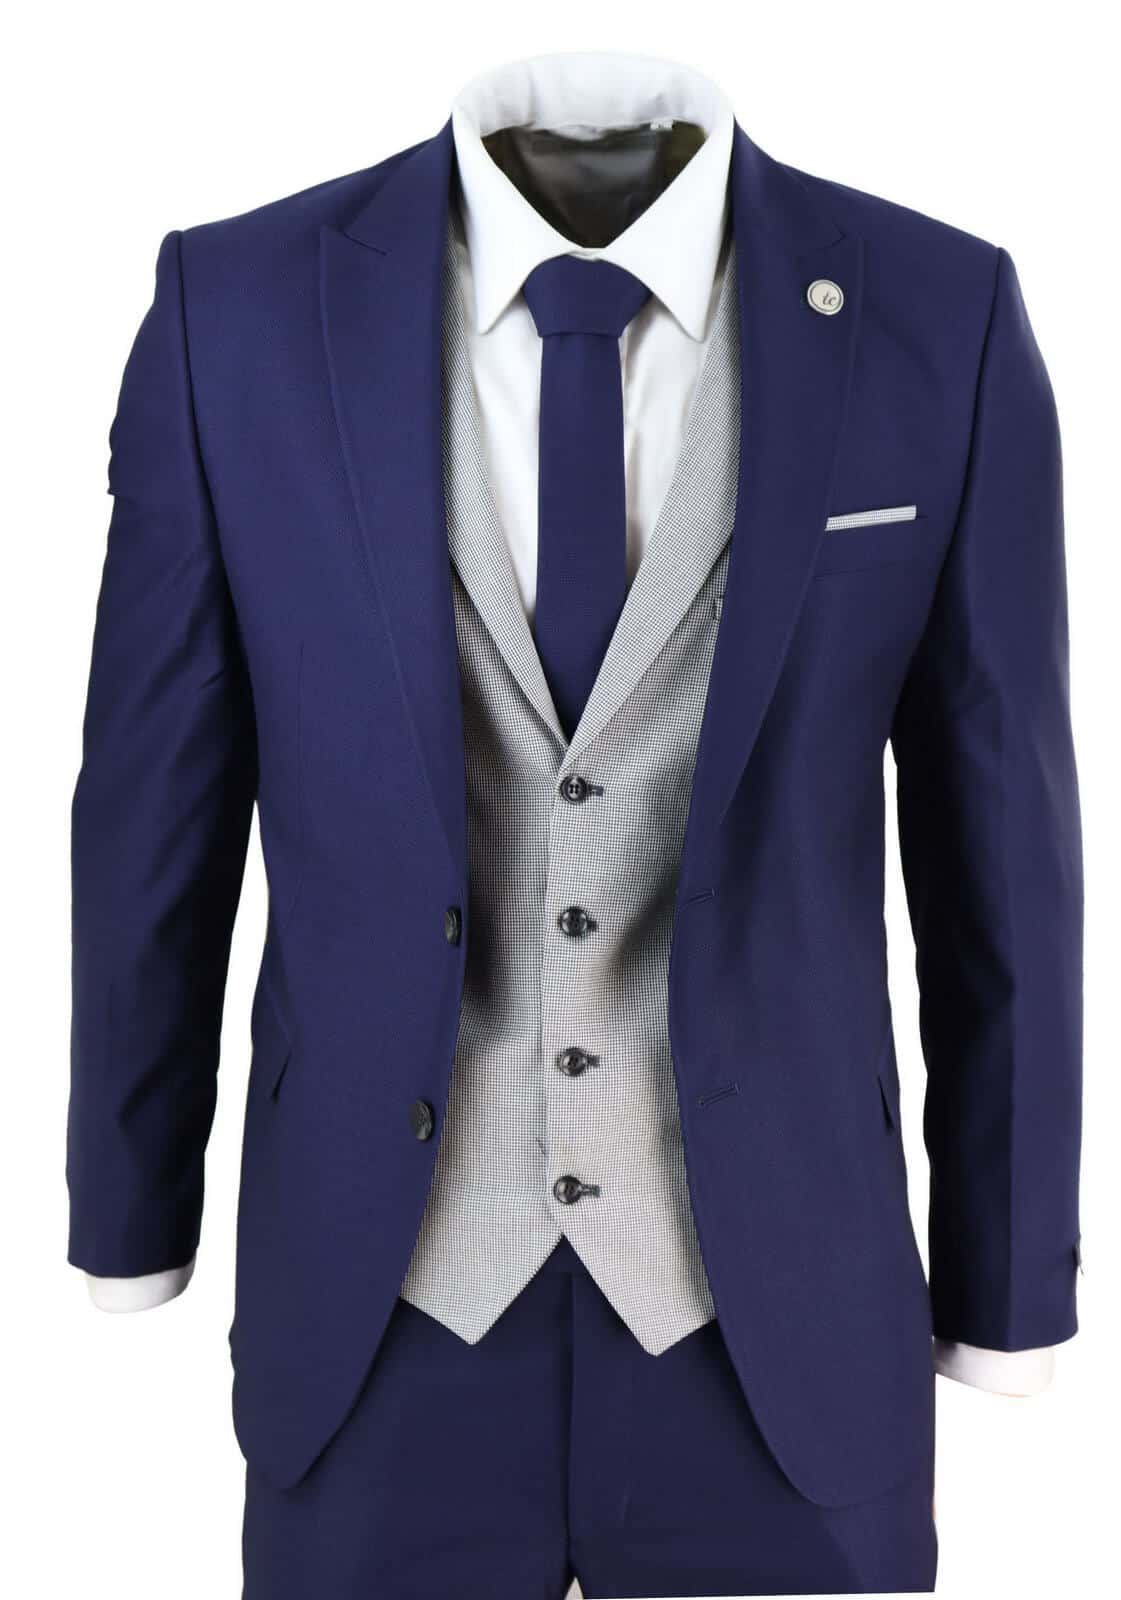 Formal suit, Navy Blue, Jacket, Waistcoat, Pants and Tie - C3853